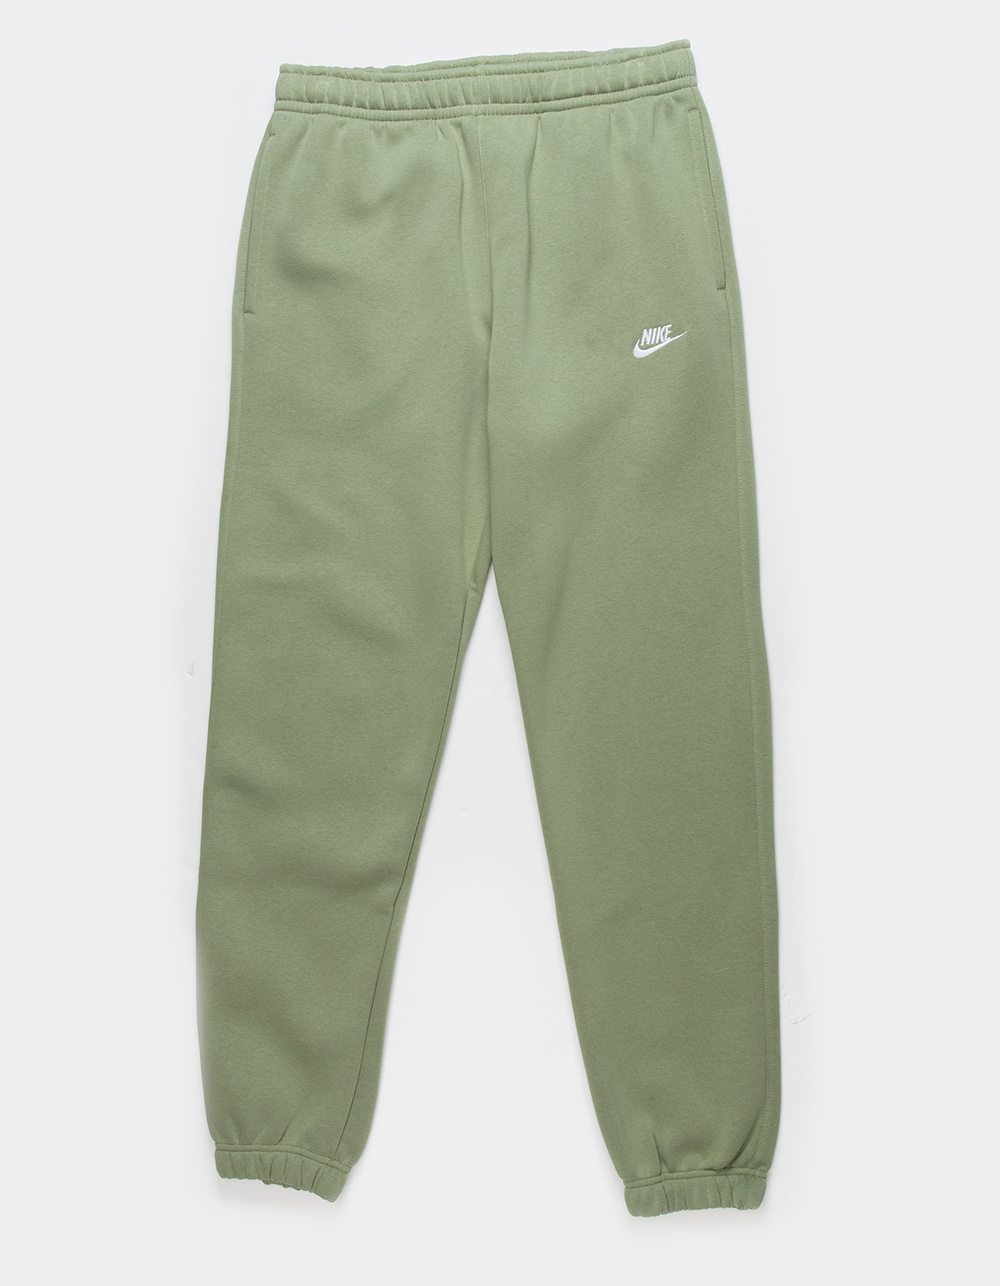 Nike Essentials Fleece cuffed cargo sweatpants in olive green